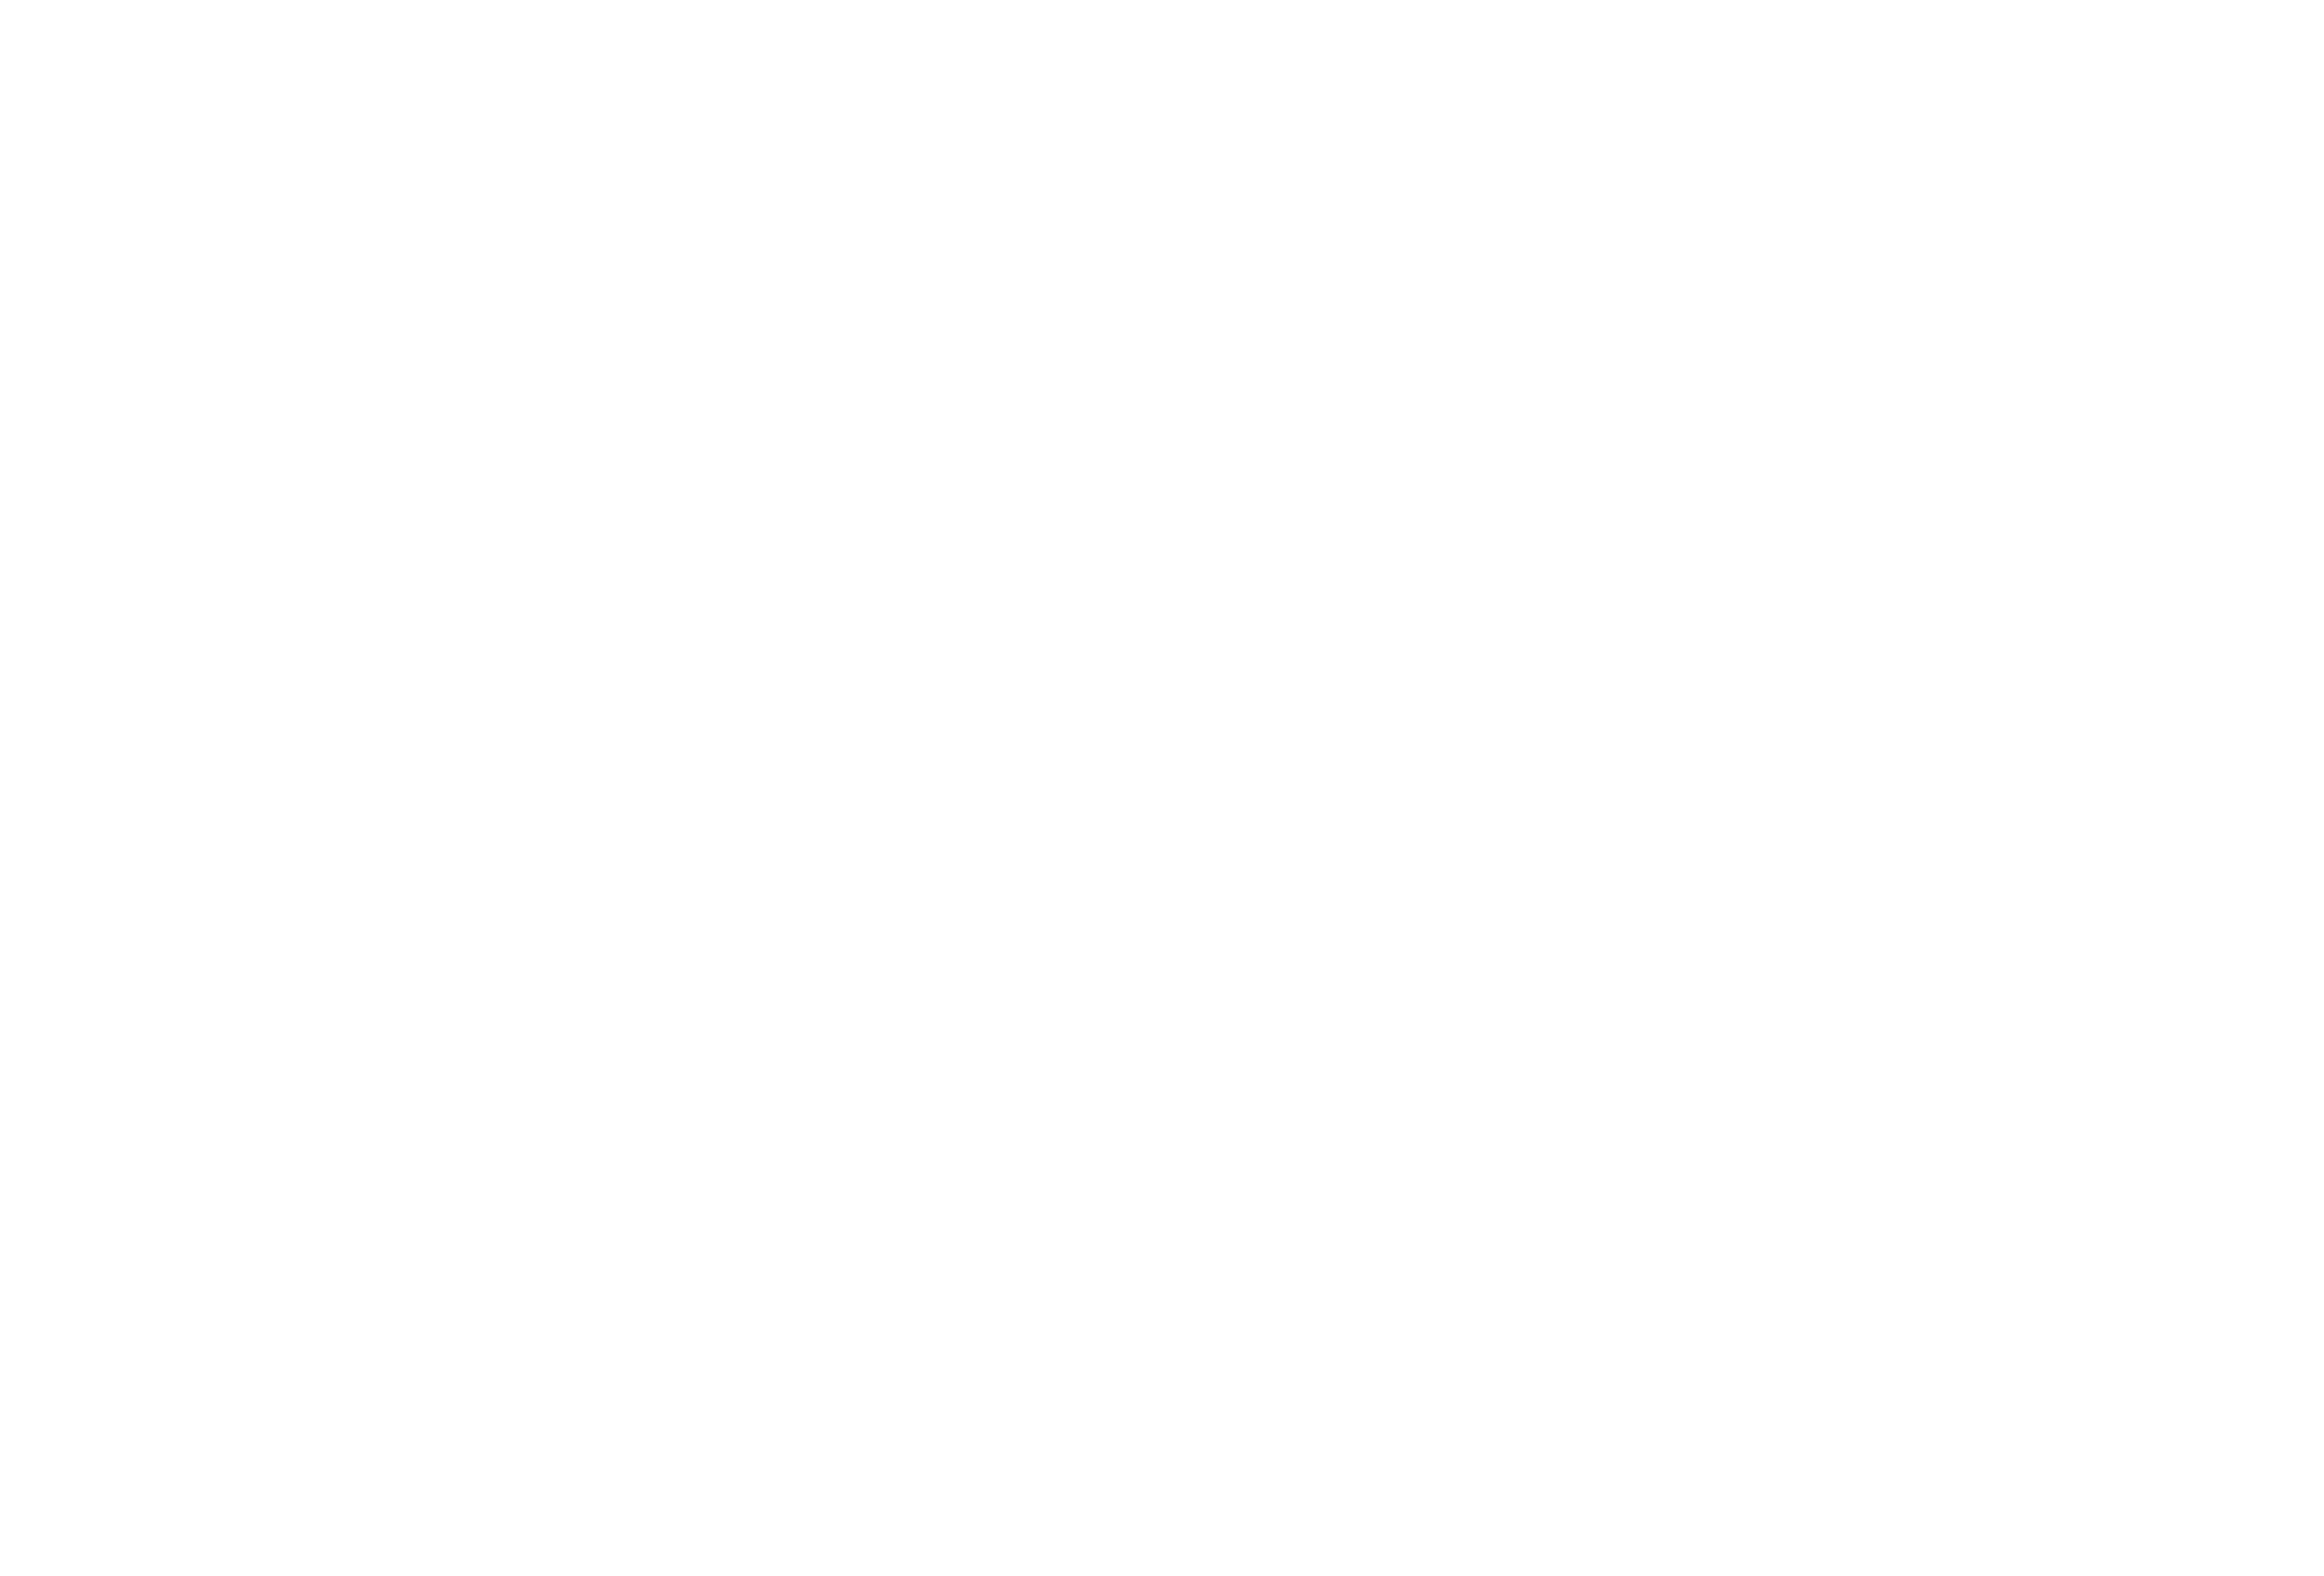 VCL Logo - Village Church of Lincolnshire